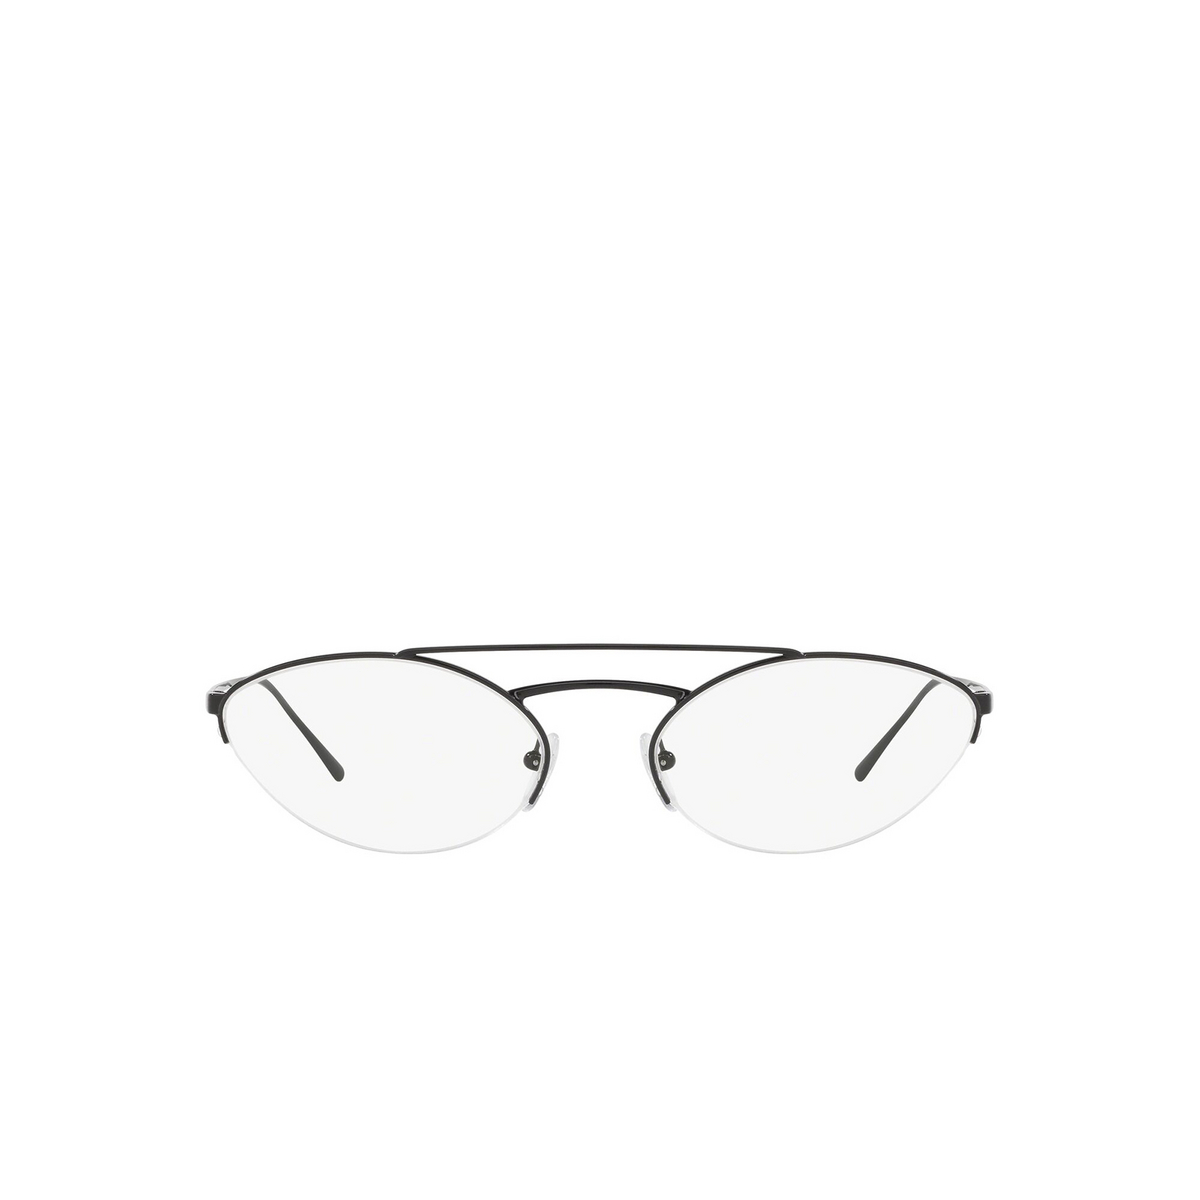 Prada® Oval Eyeglasses: Catwalk PR 62VV color Black 1AB1O1 - front view.